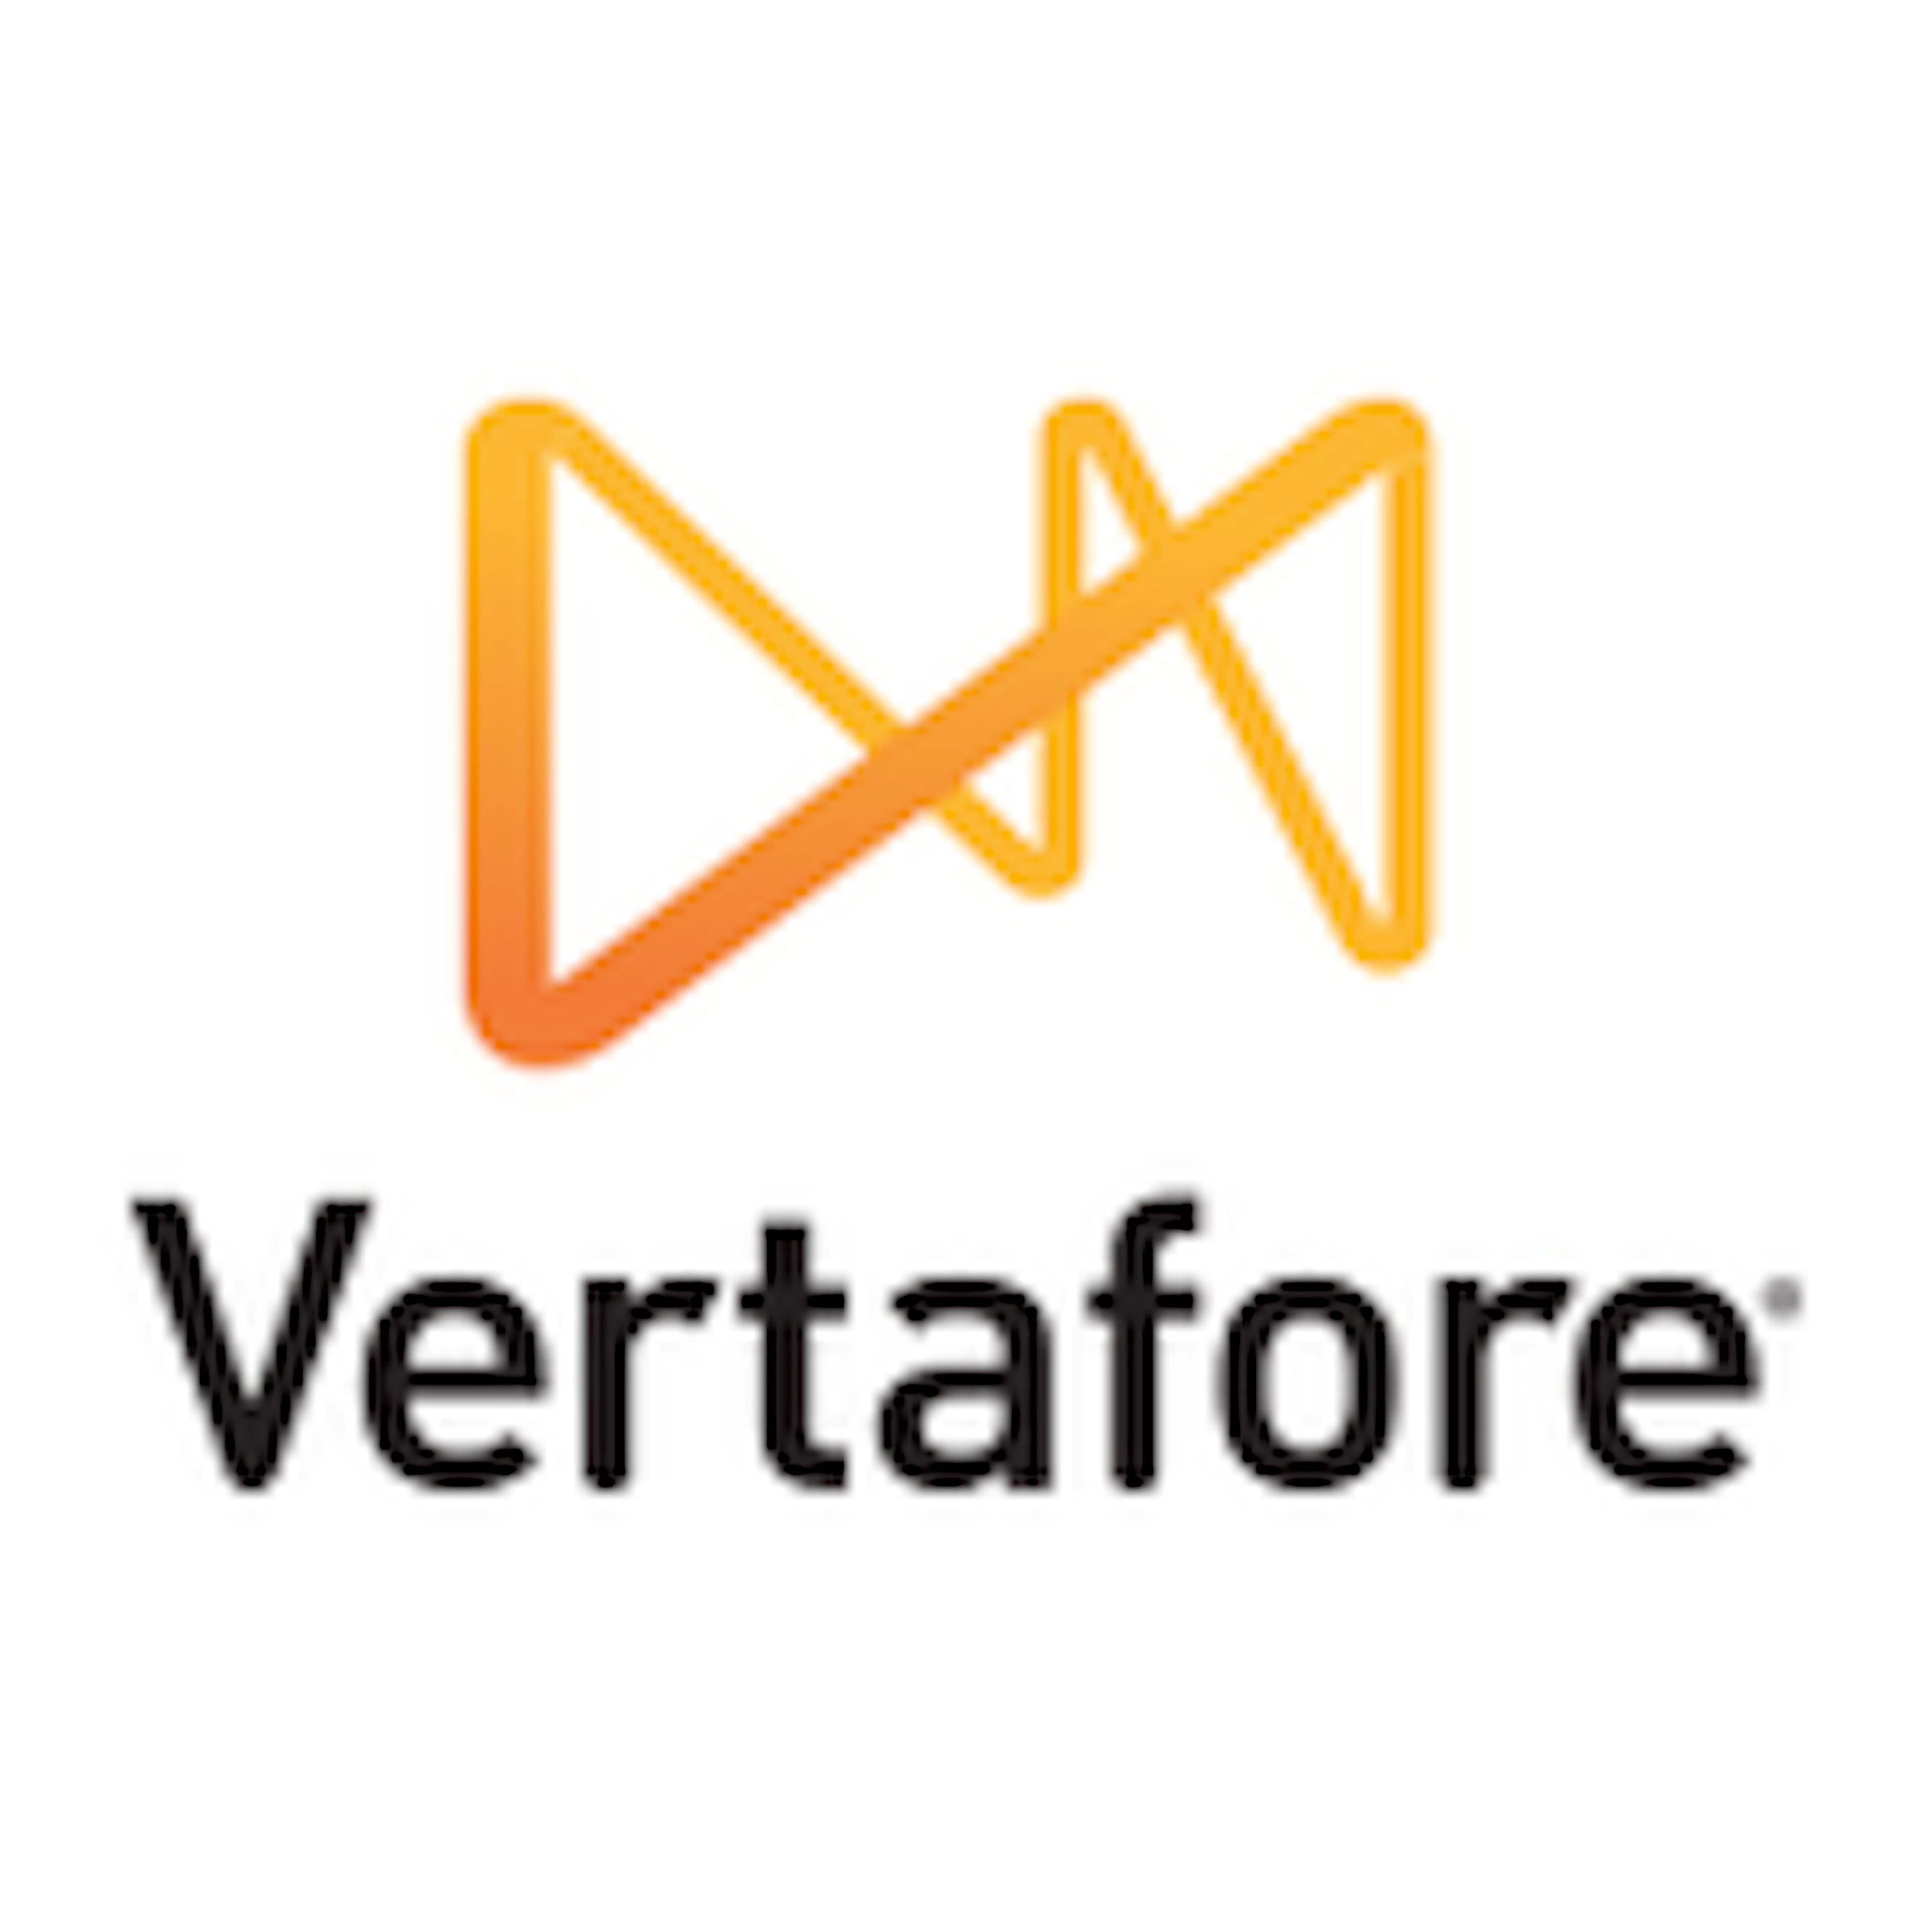 Vertafore Agency Platform Logo